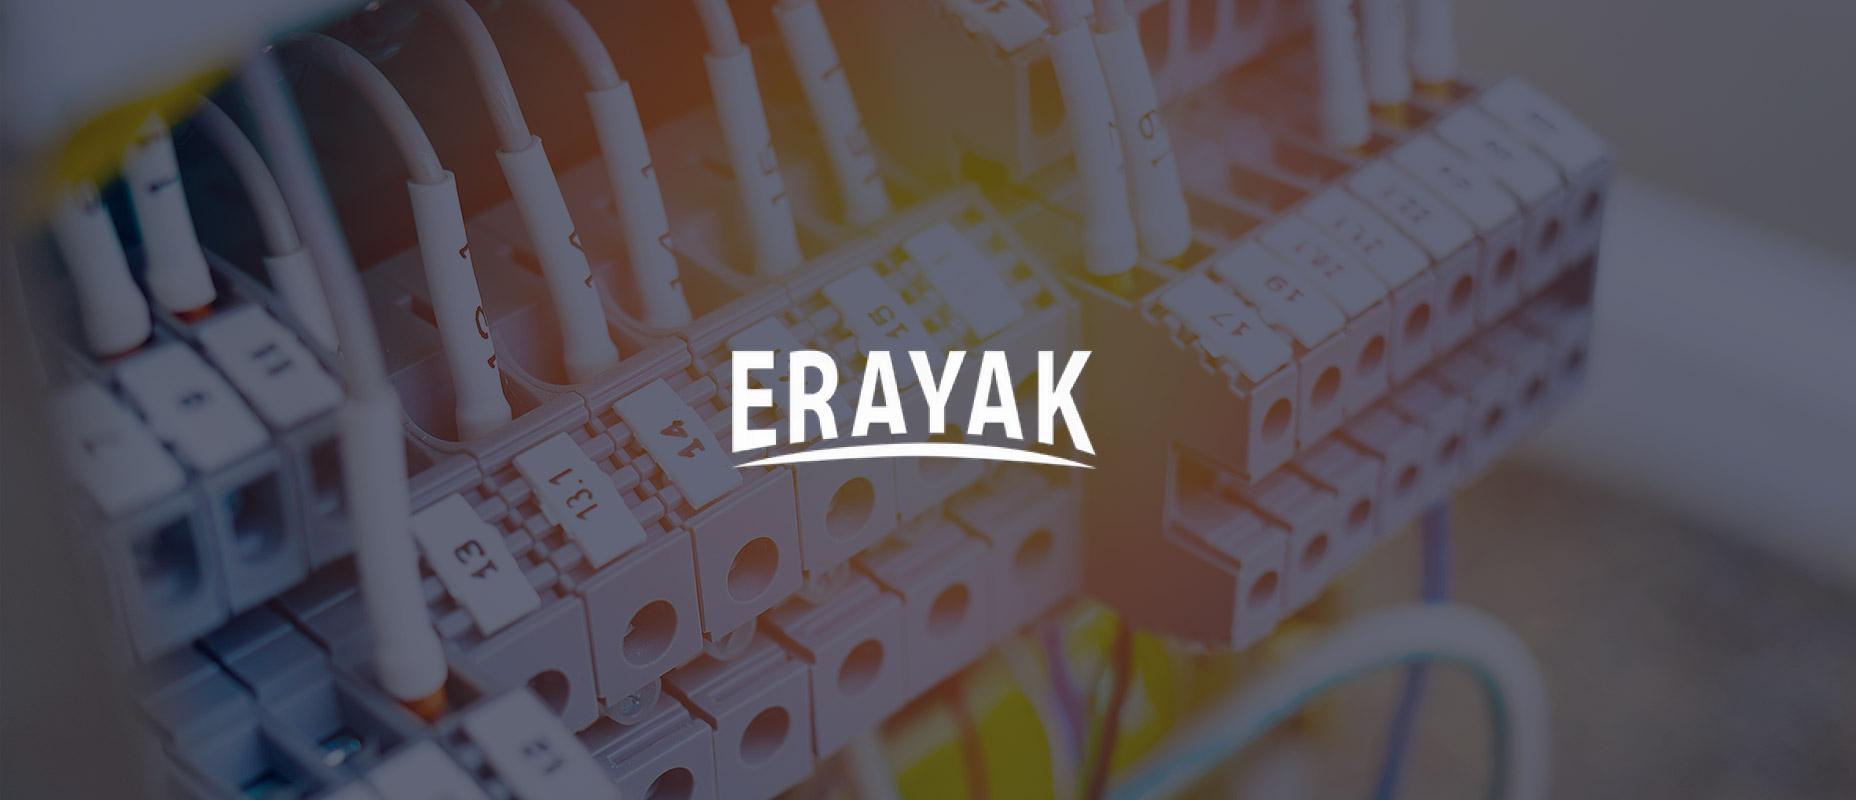 Börsengang der Erayak Power Solution Group: Netzunabhängige Energiesysteme aus China